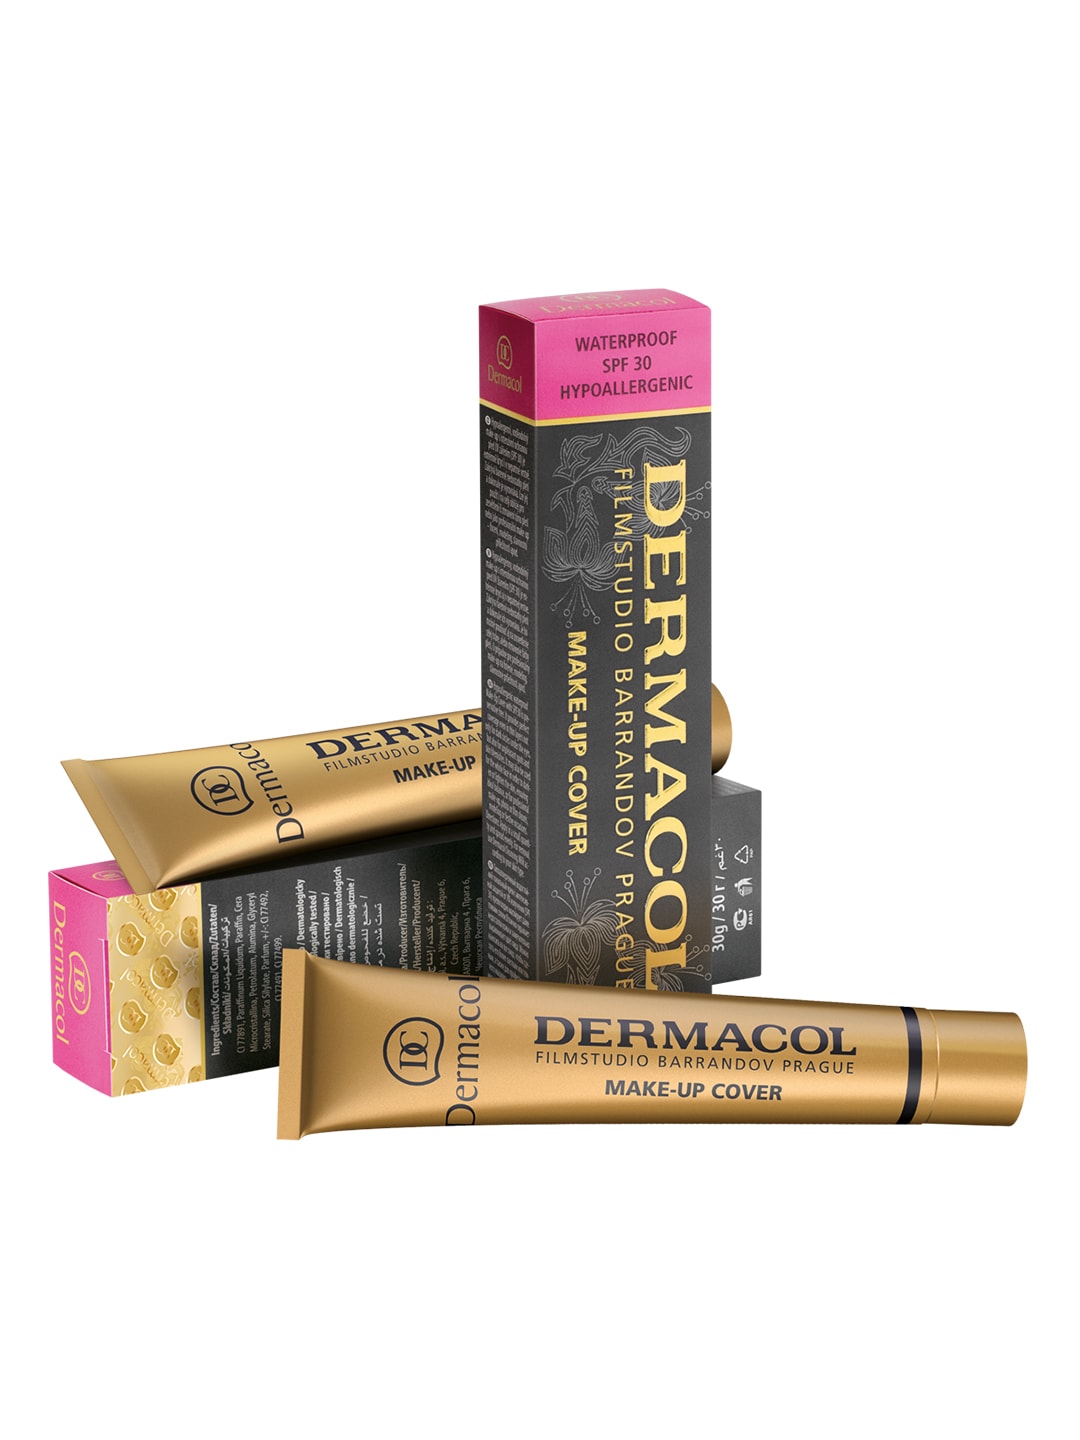 Dermacol Makeup Cover SPF 30 -Medium Golden Beige 227 - 30 g Price in India